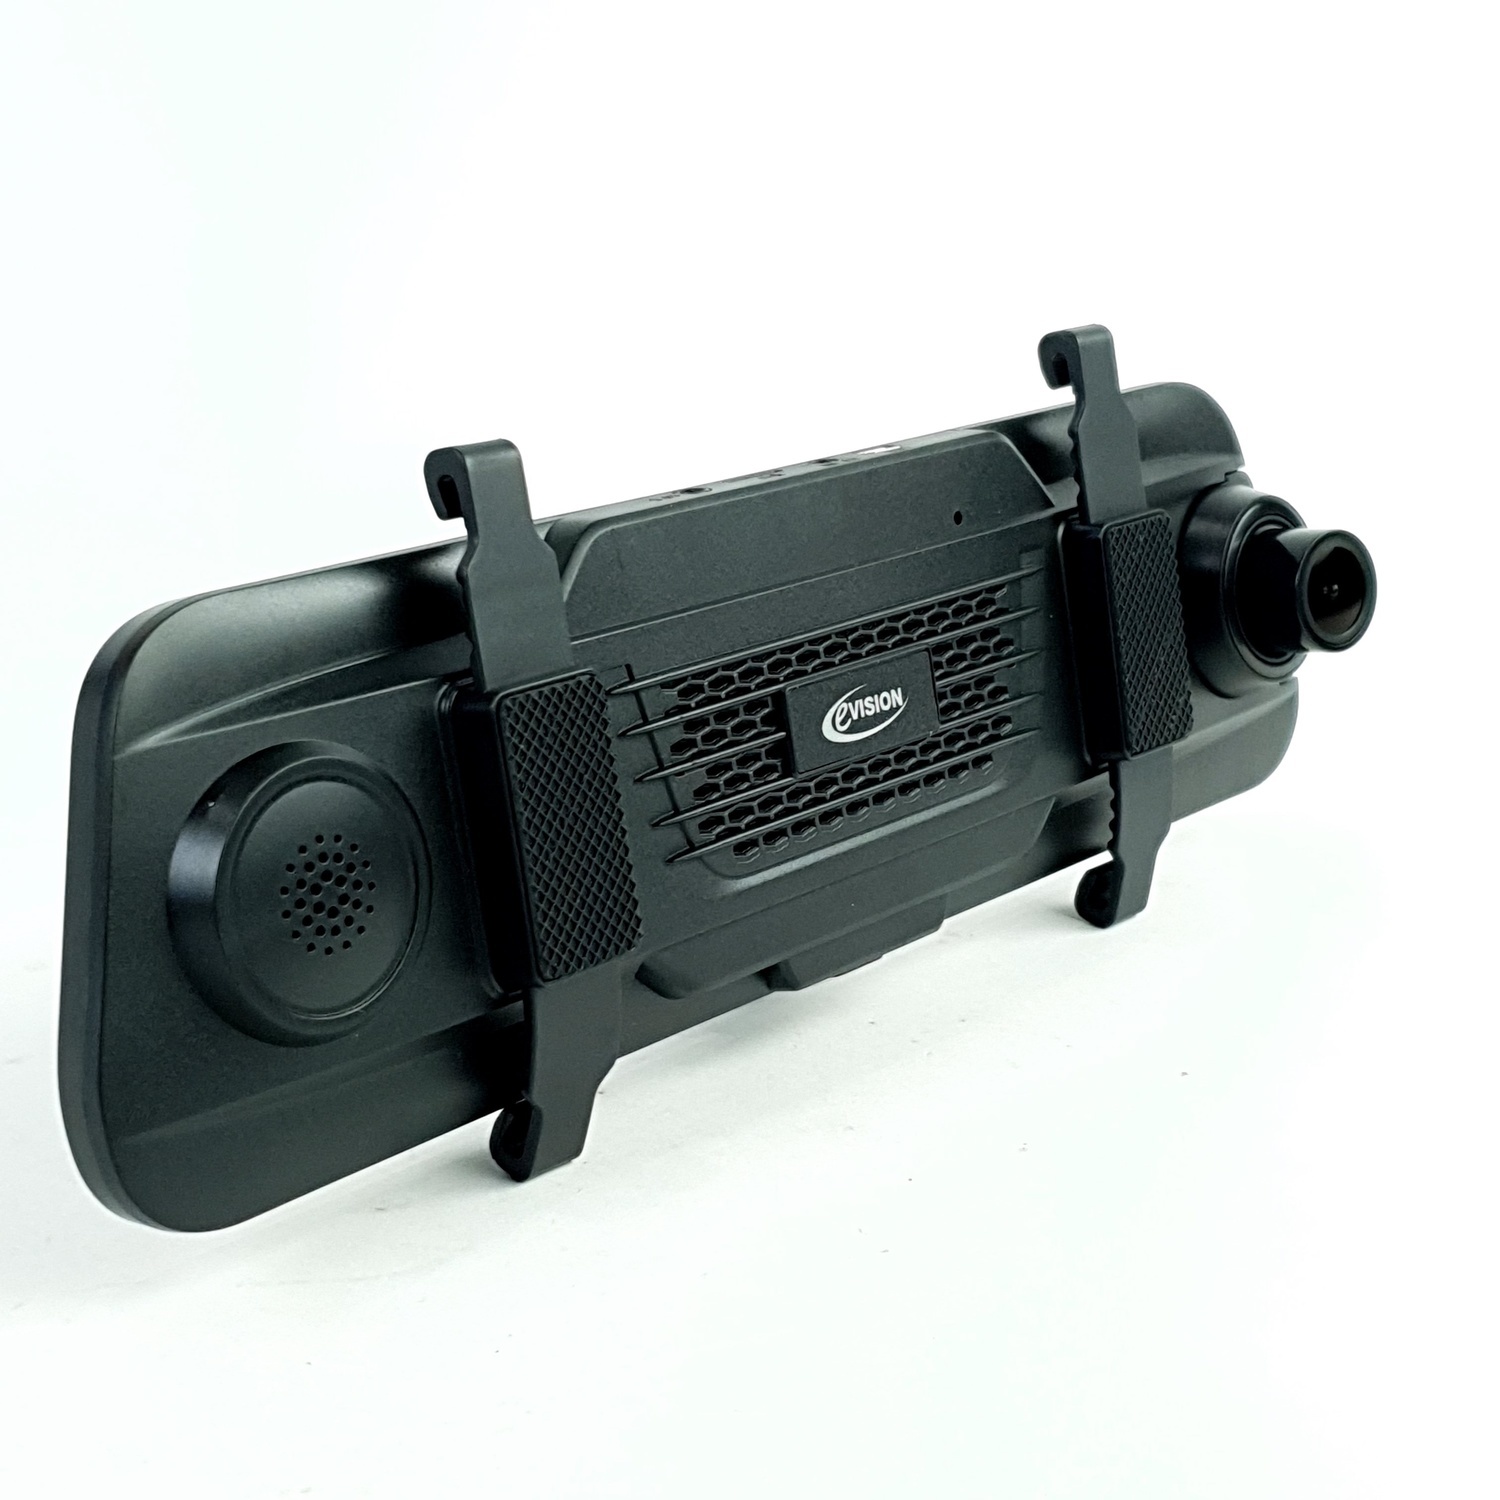 EVISION กล้องติดรถยนต์แบบกระจก(กล้องหน้าและหลัง) รุ่น CD-700R (9.66นิ้ว) ขนาด 25.80x7.20x4.50cm สีดำ